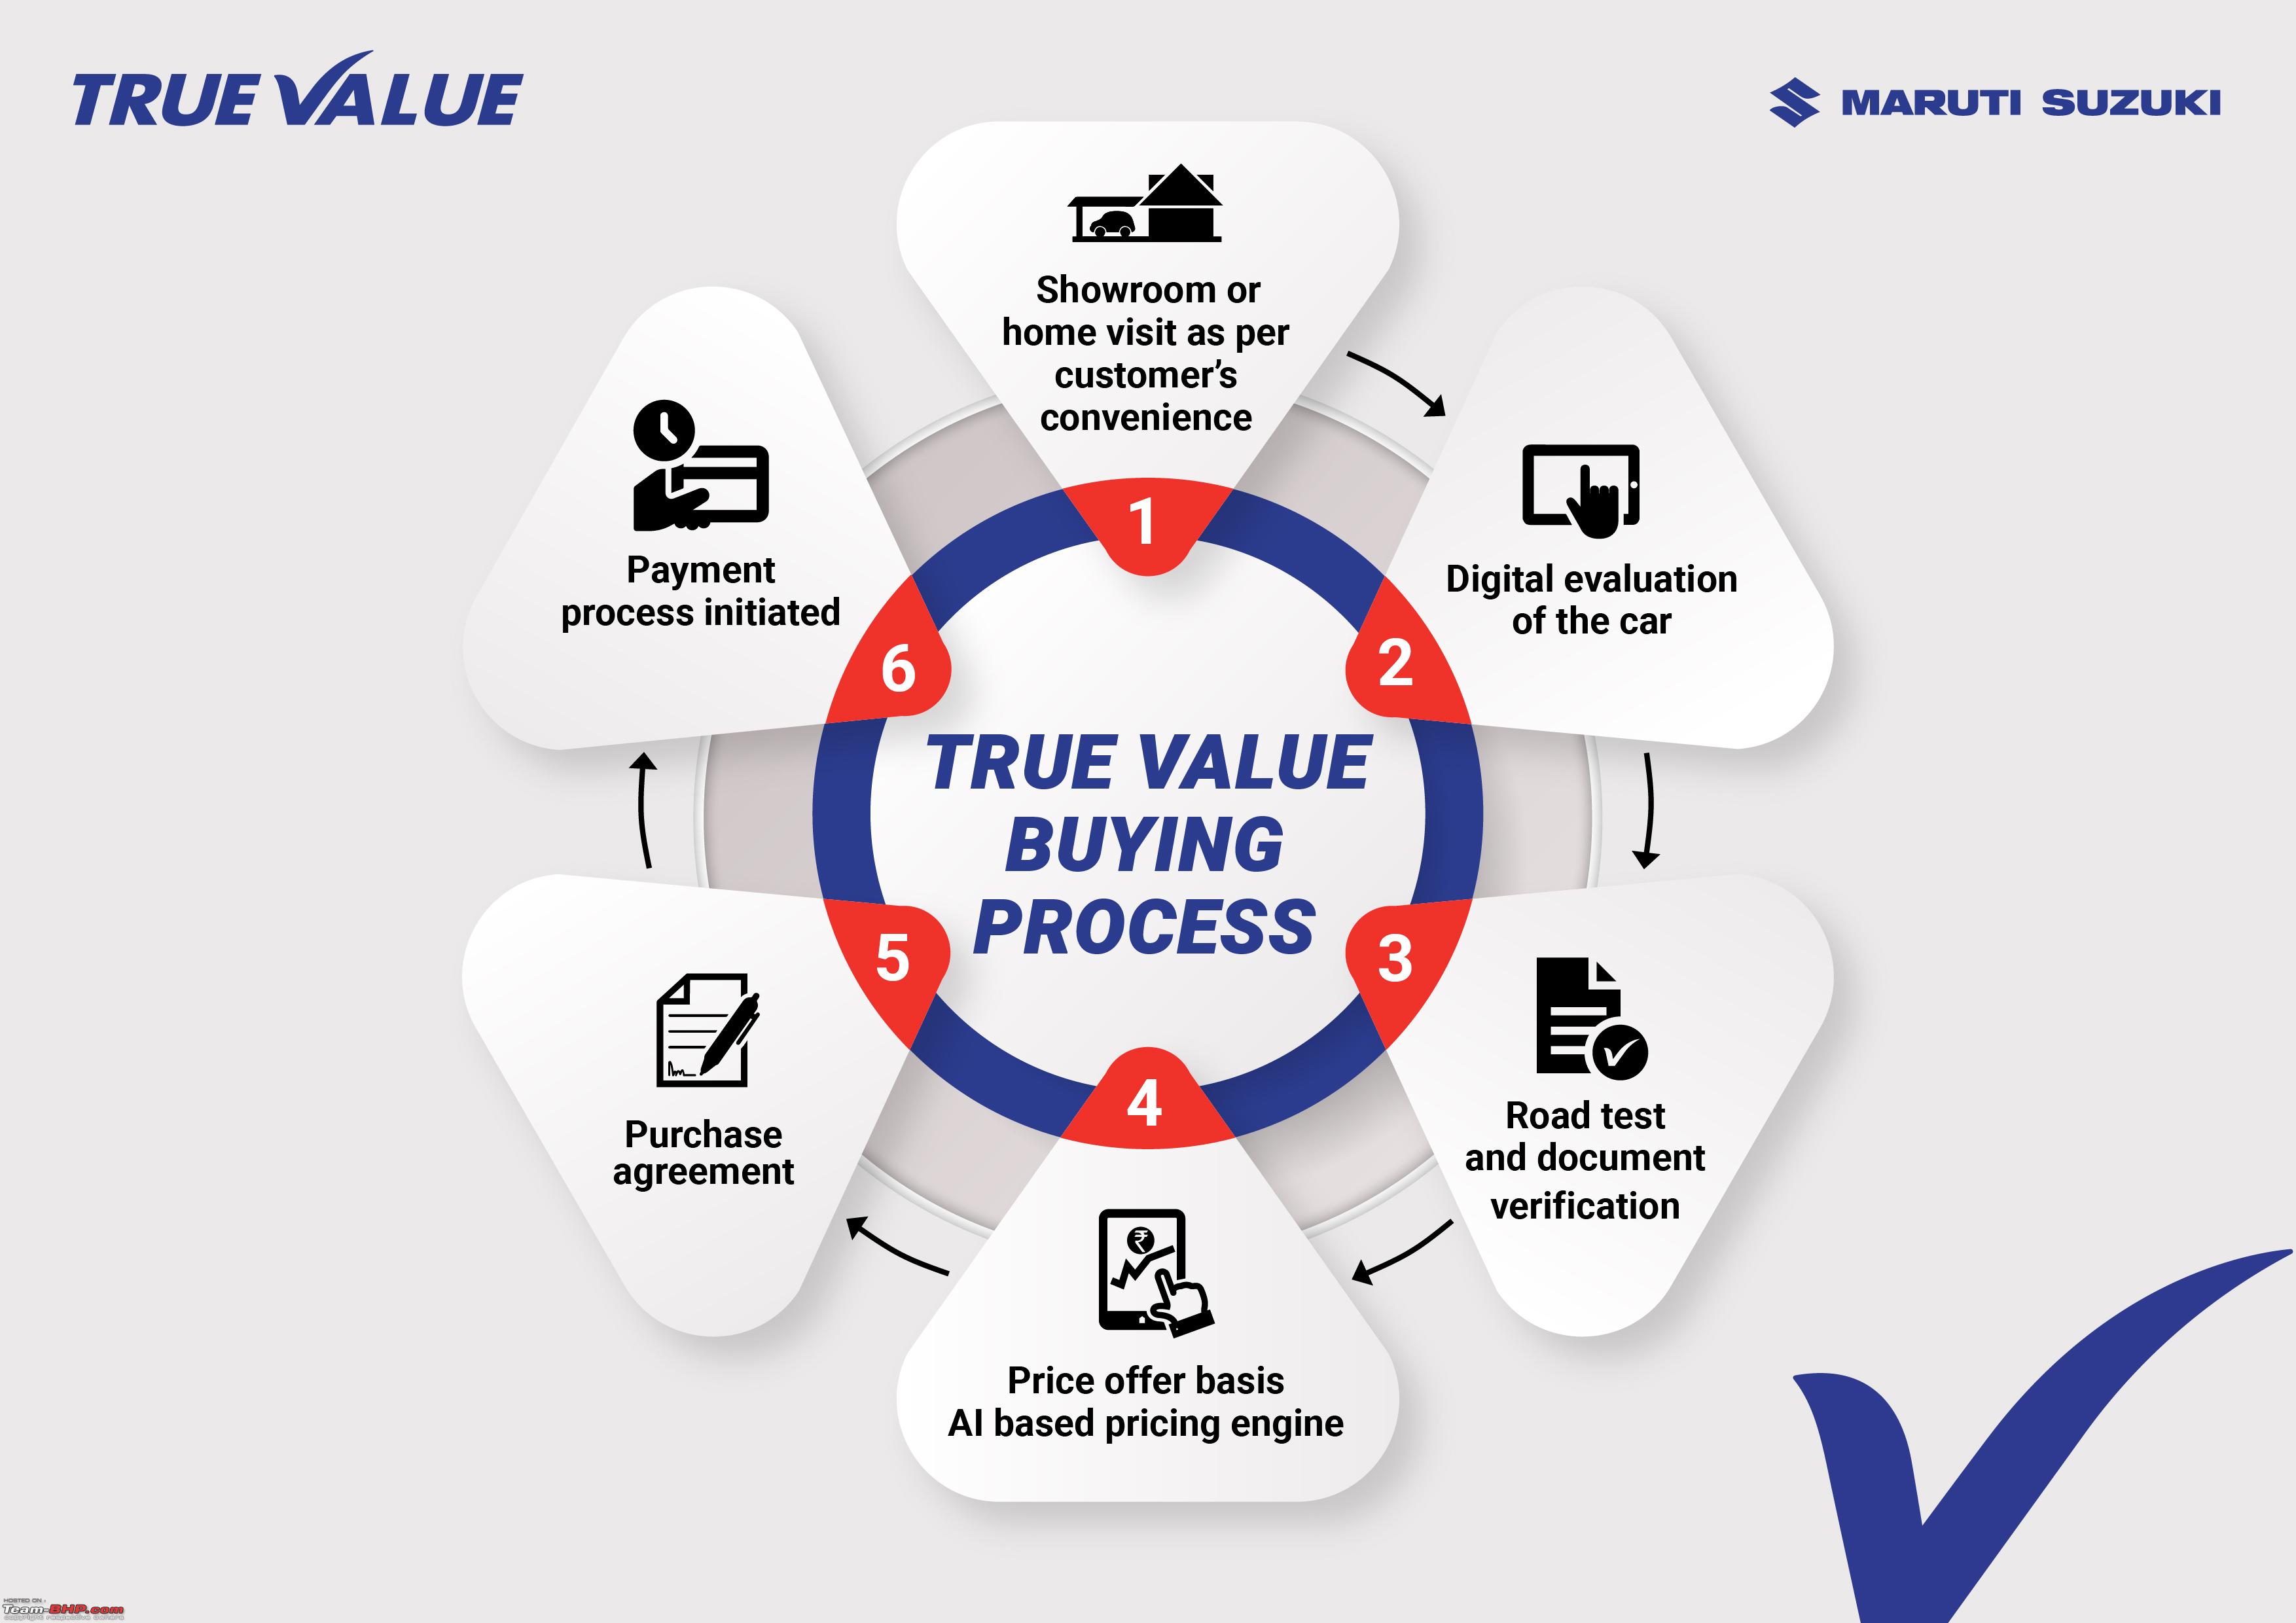 Value now. True value. True value co..